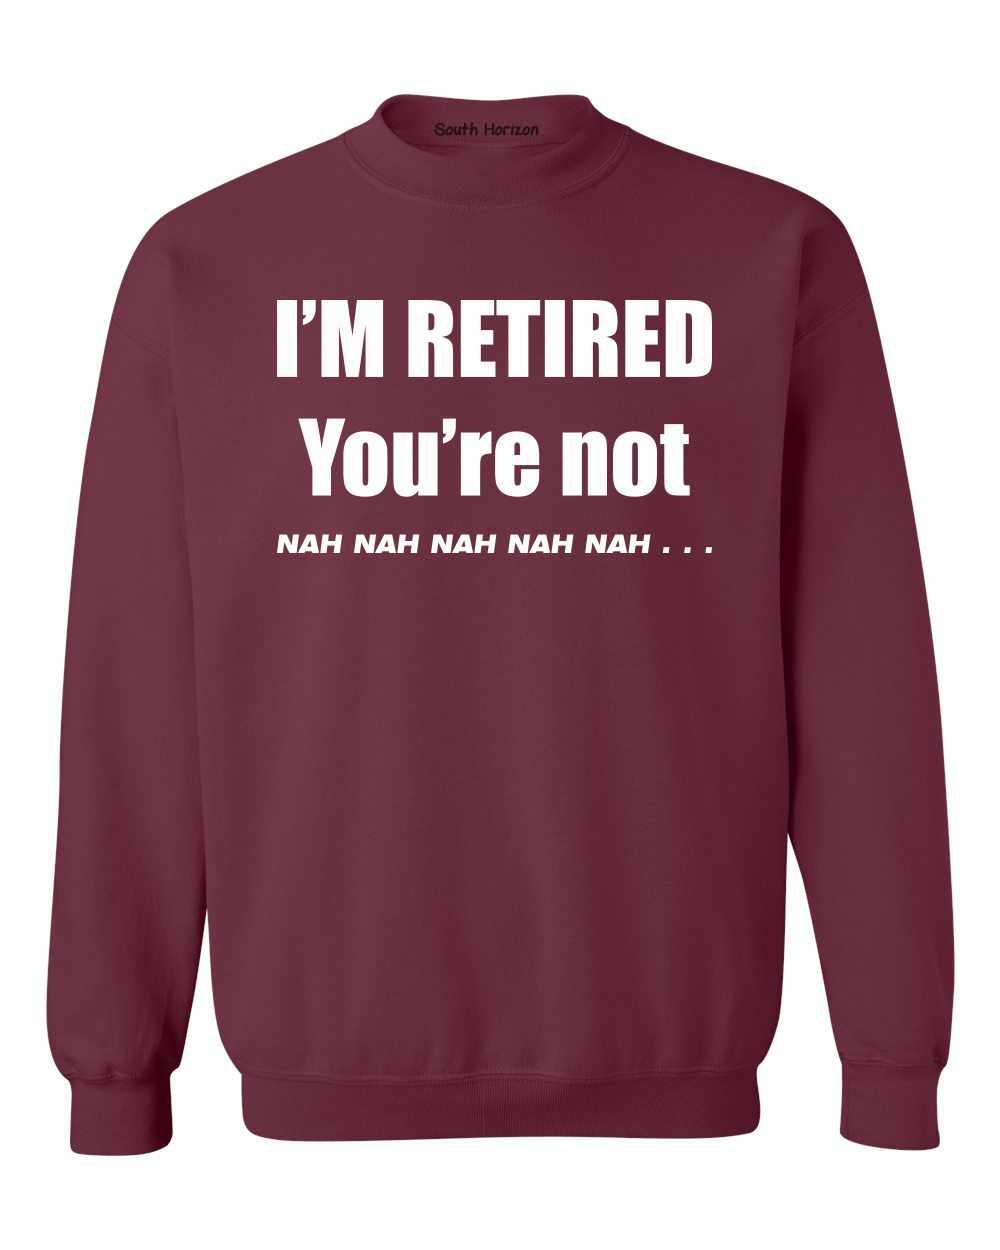 I'M RETIRED YOU ARE NOT, NAH, NAH, NAH on SweatShirt (#904-11)